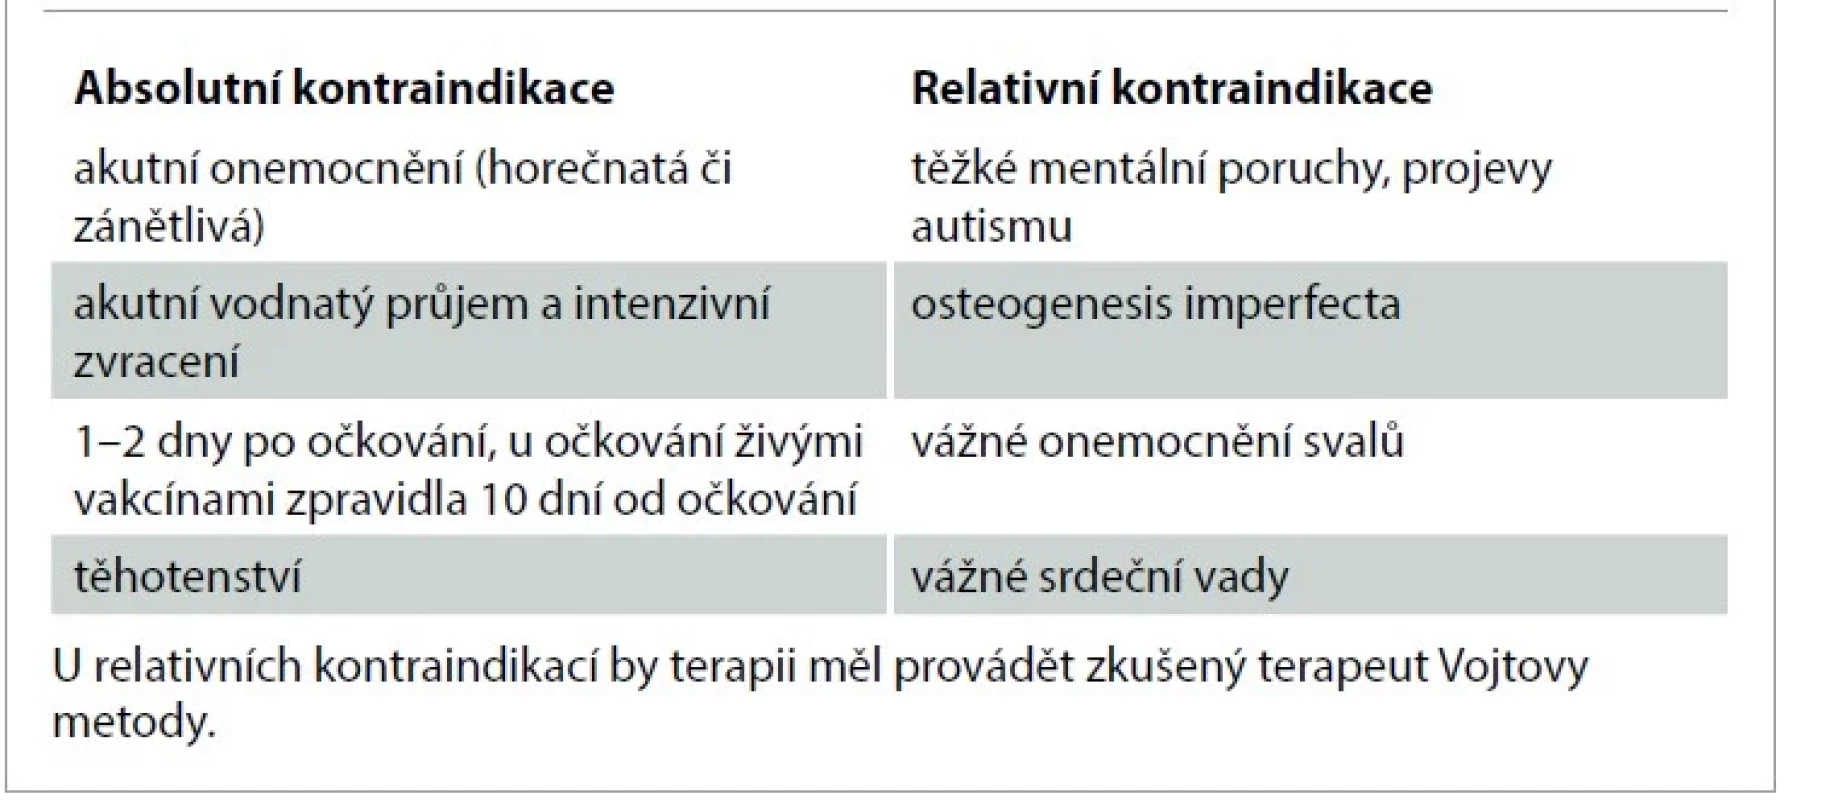 Kontraindikace Vojtovy terapie.<br>
Tab. 2. Contraindications of Vojta therapy.